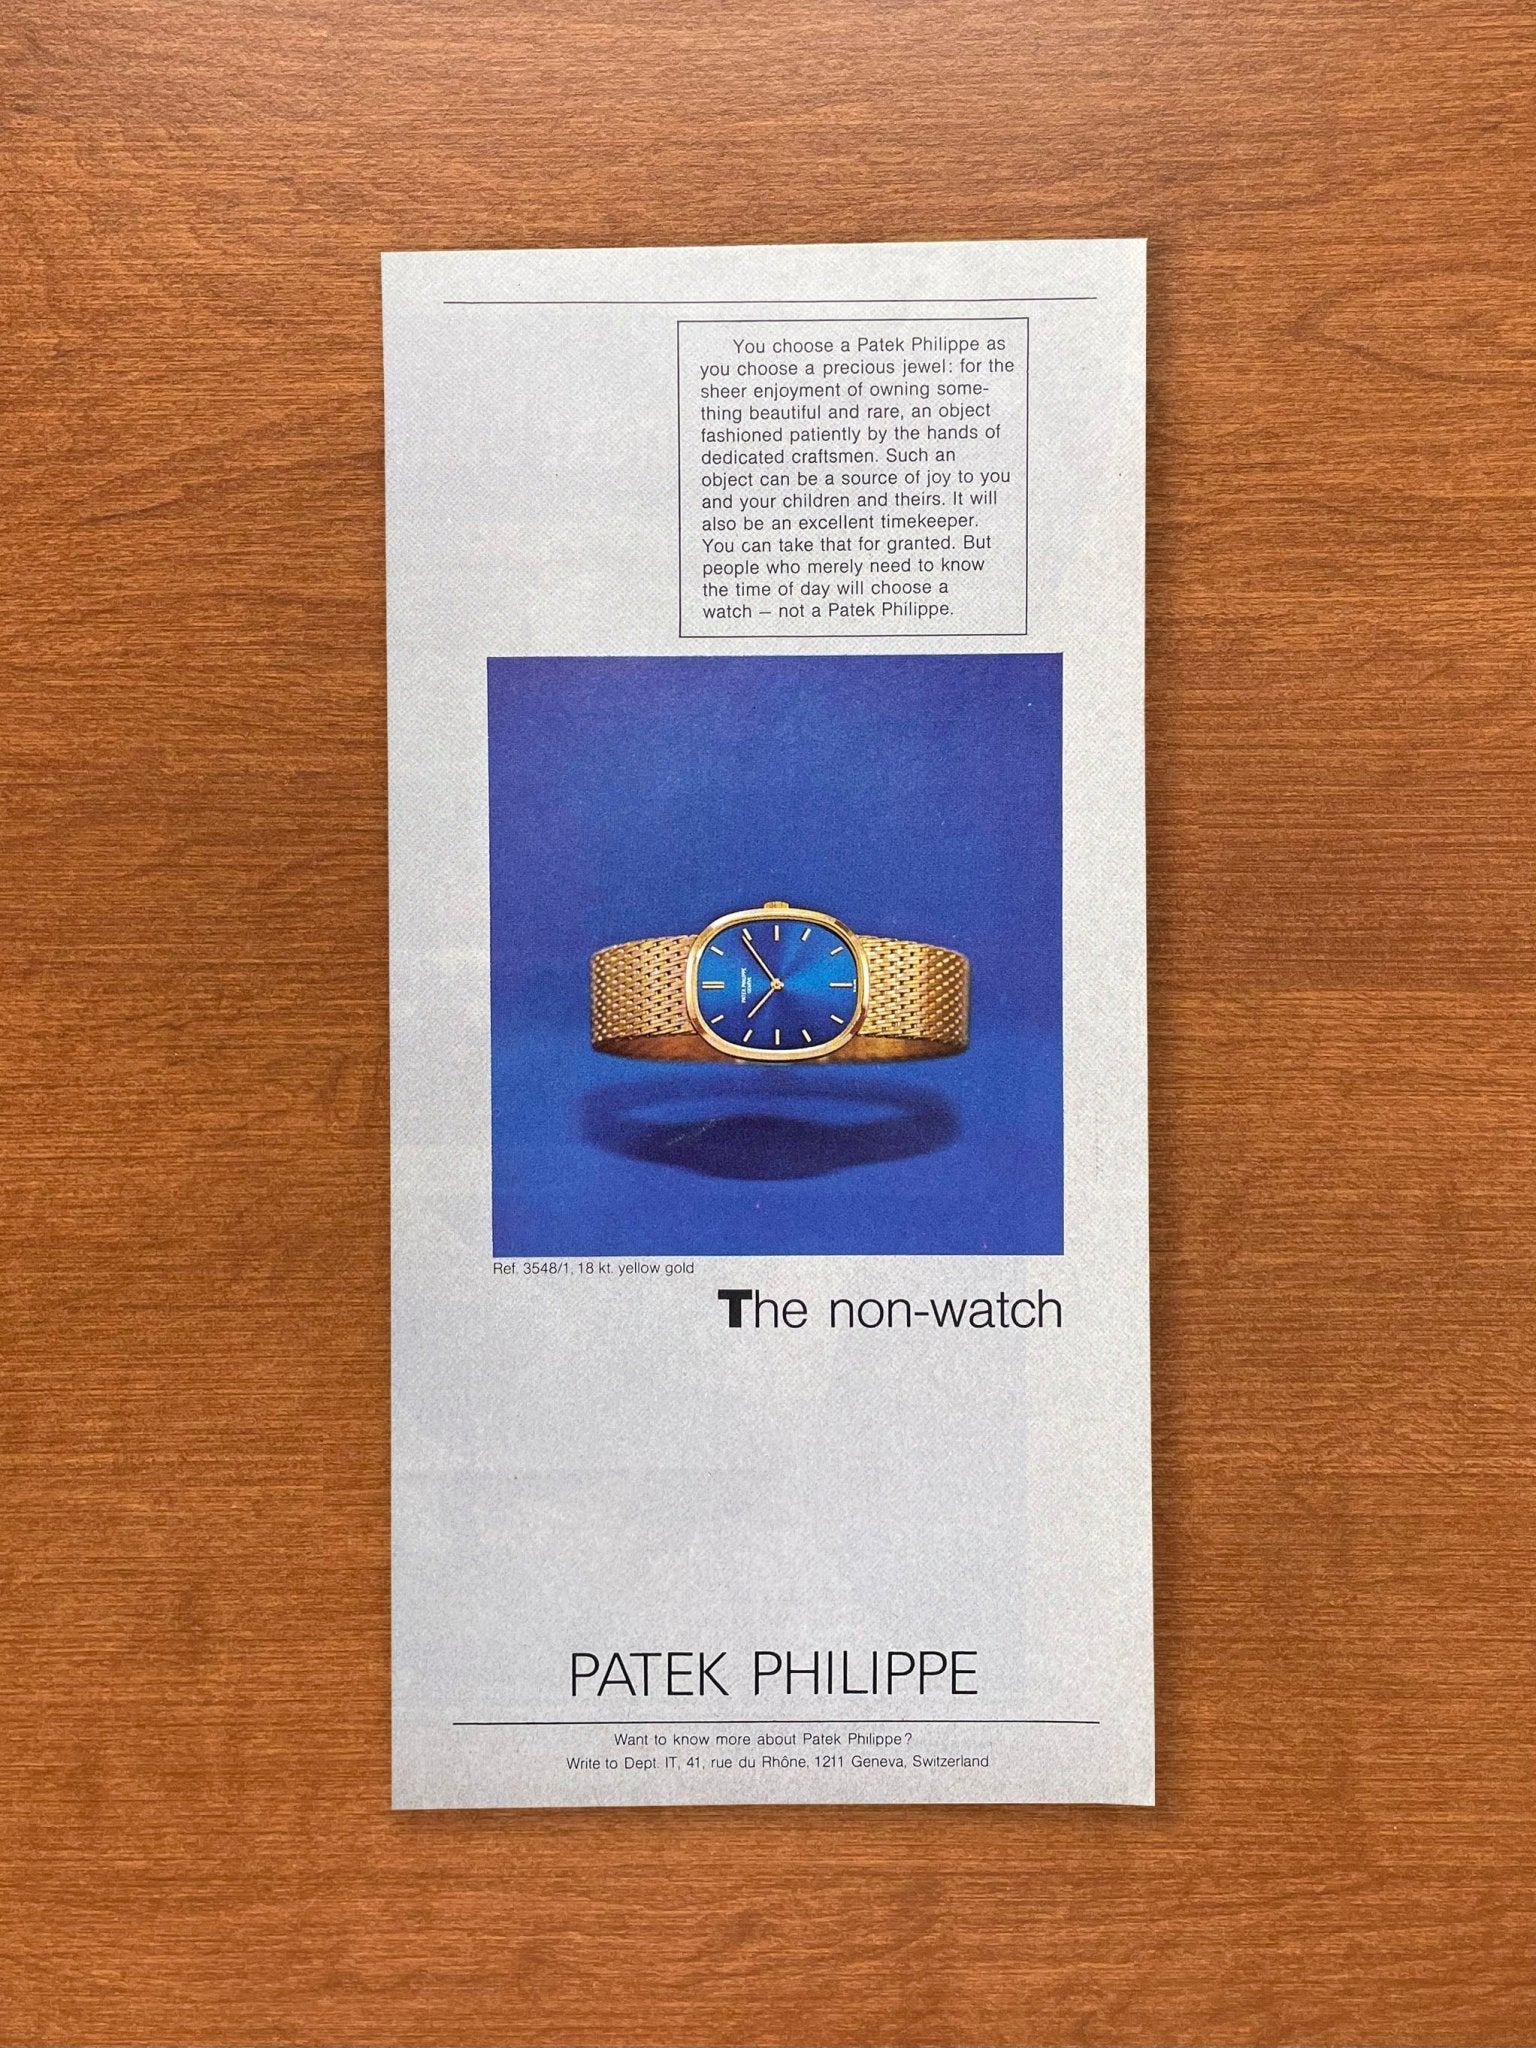 1972 Patek Philippe Ellipse "The non-watch" Advertisement